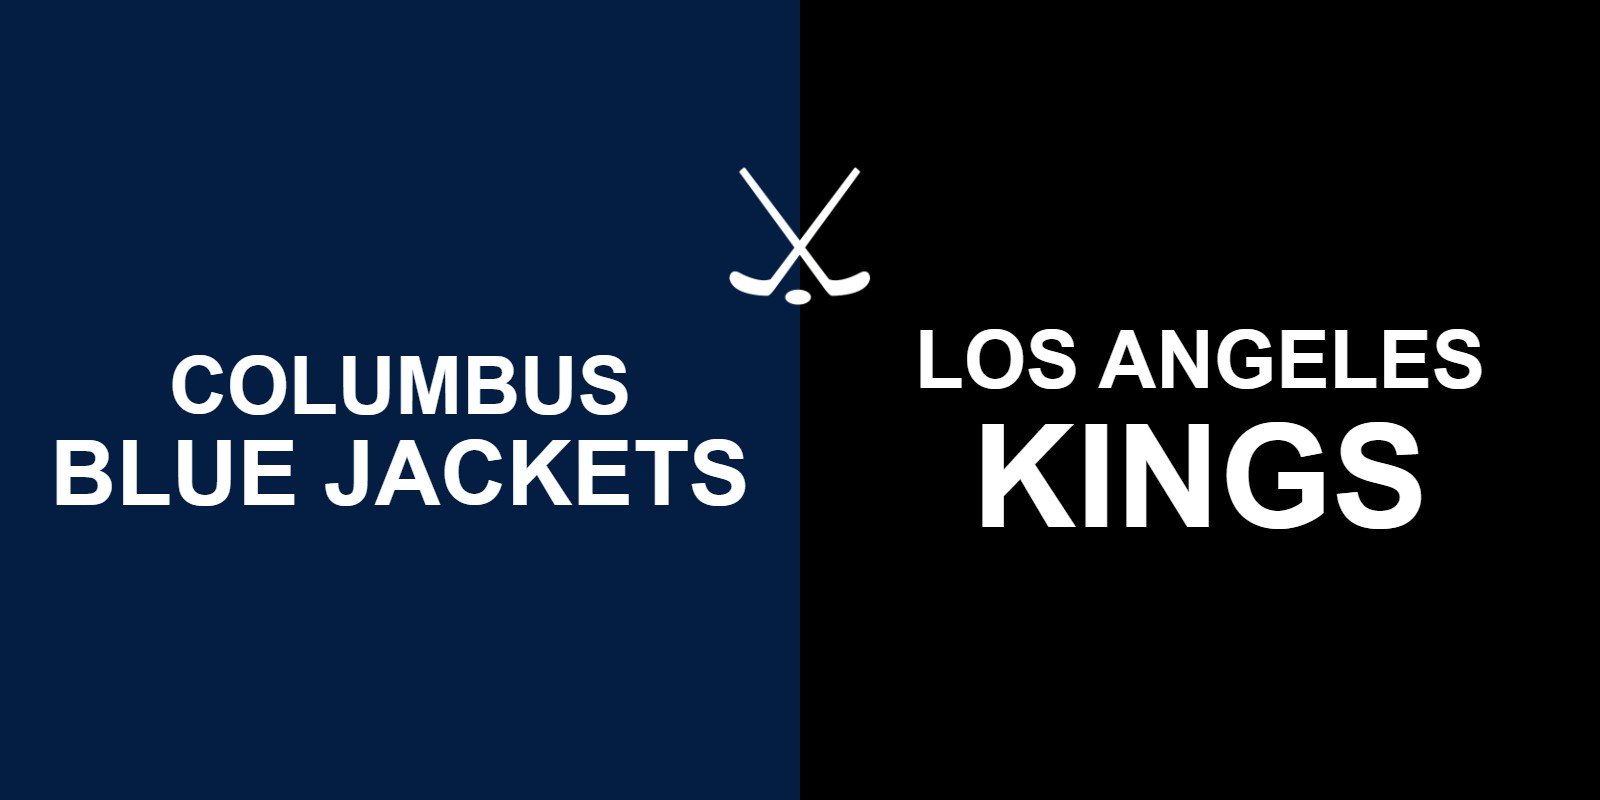 Blue Jackets vs Kings